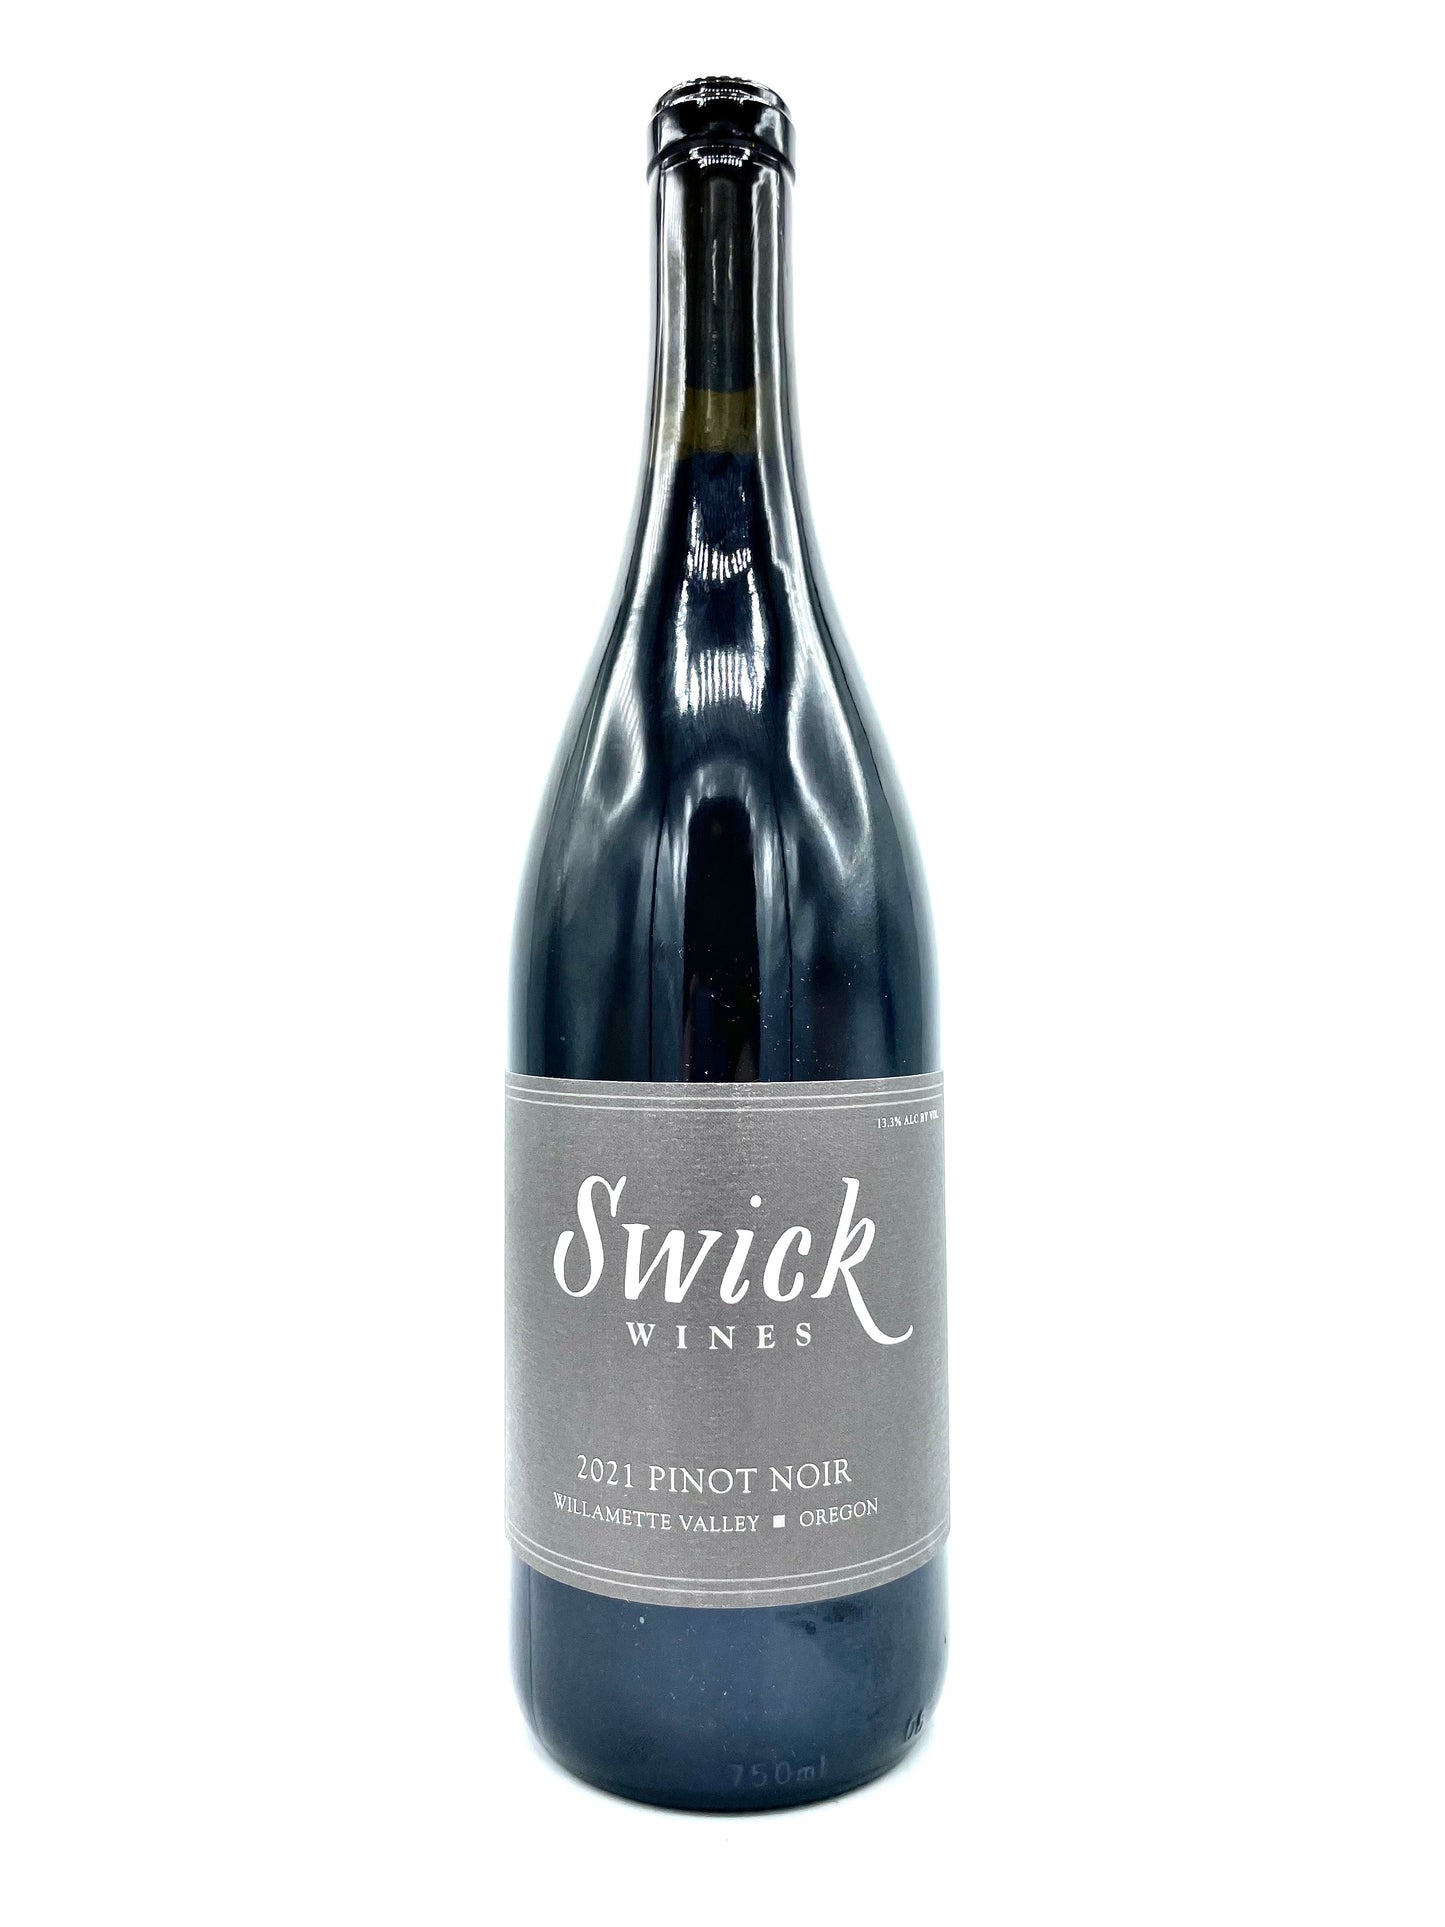 Swick Wines, Willamette Valley Pinot Noir 2021